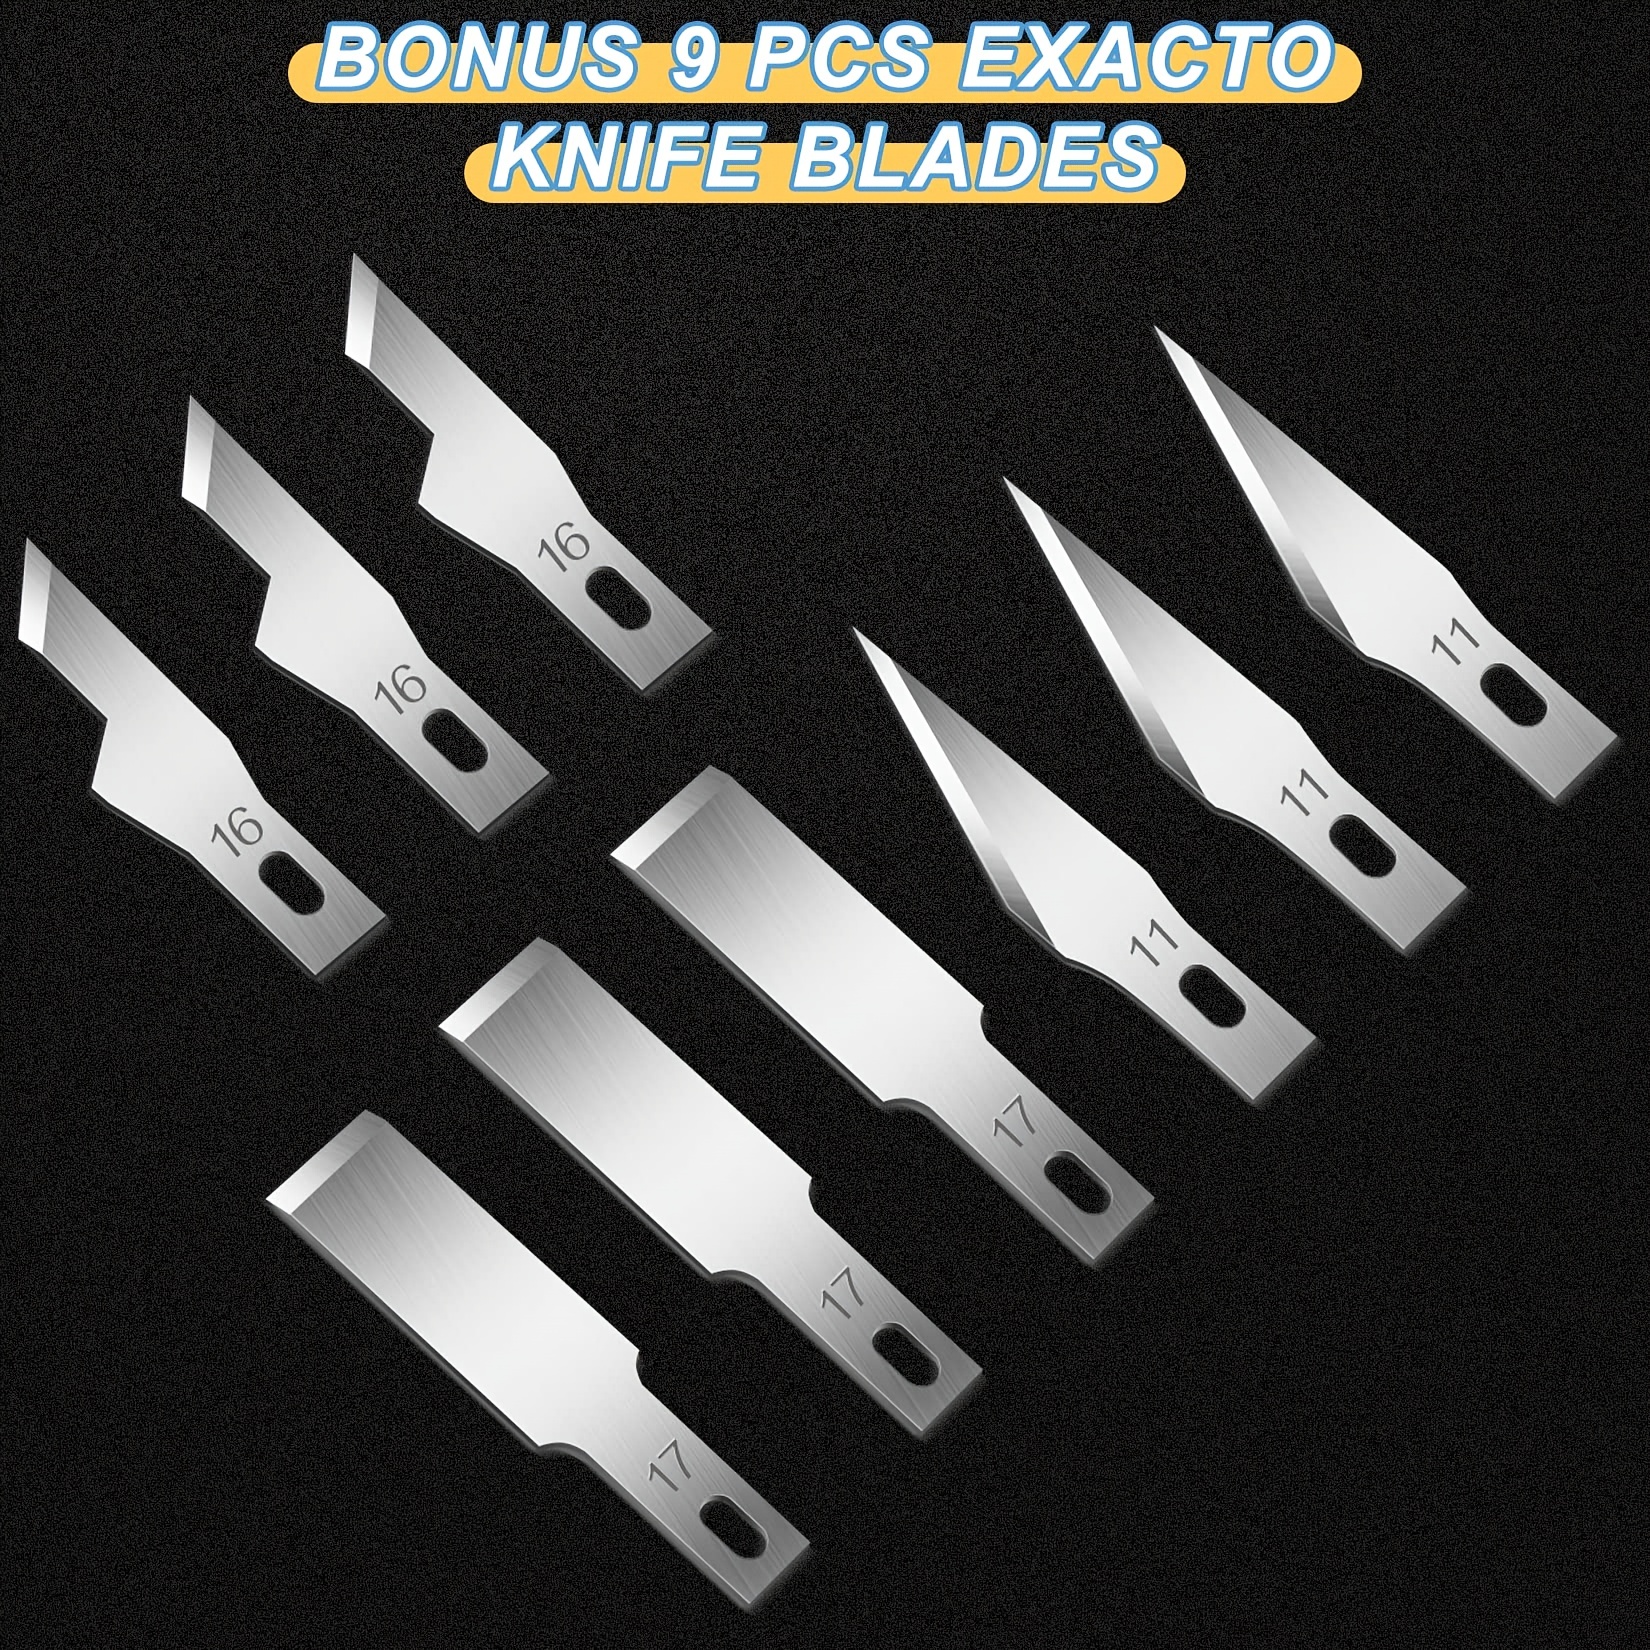 DIYSELF 150 Pcs Exacto Knife Blades 11, Sharp Hobby Knife Blades, High Carbon Steel Craft Knife Blades, 11 Hobby Knife Replacement Blades, Exacto